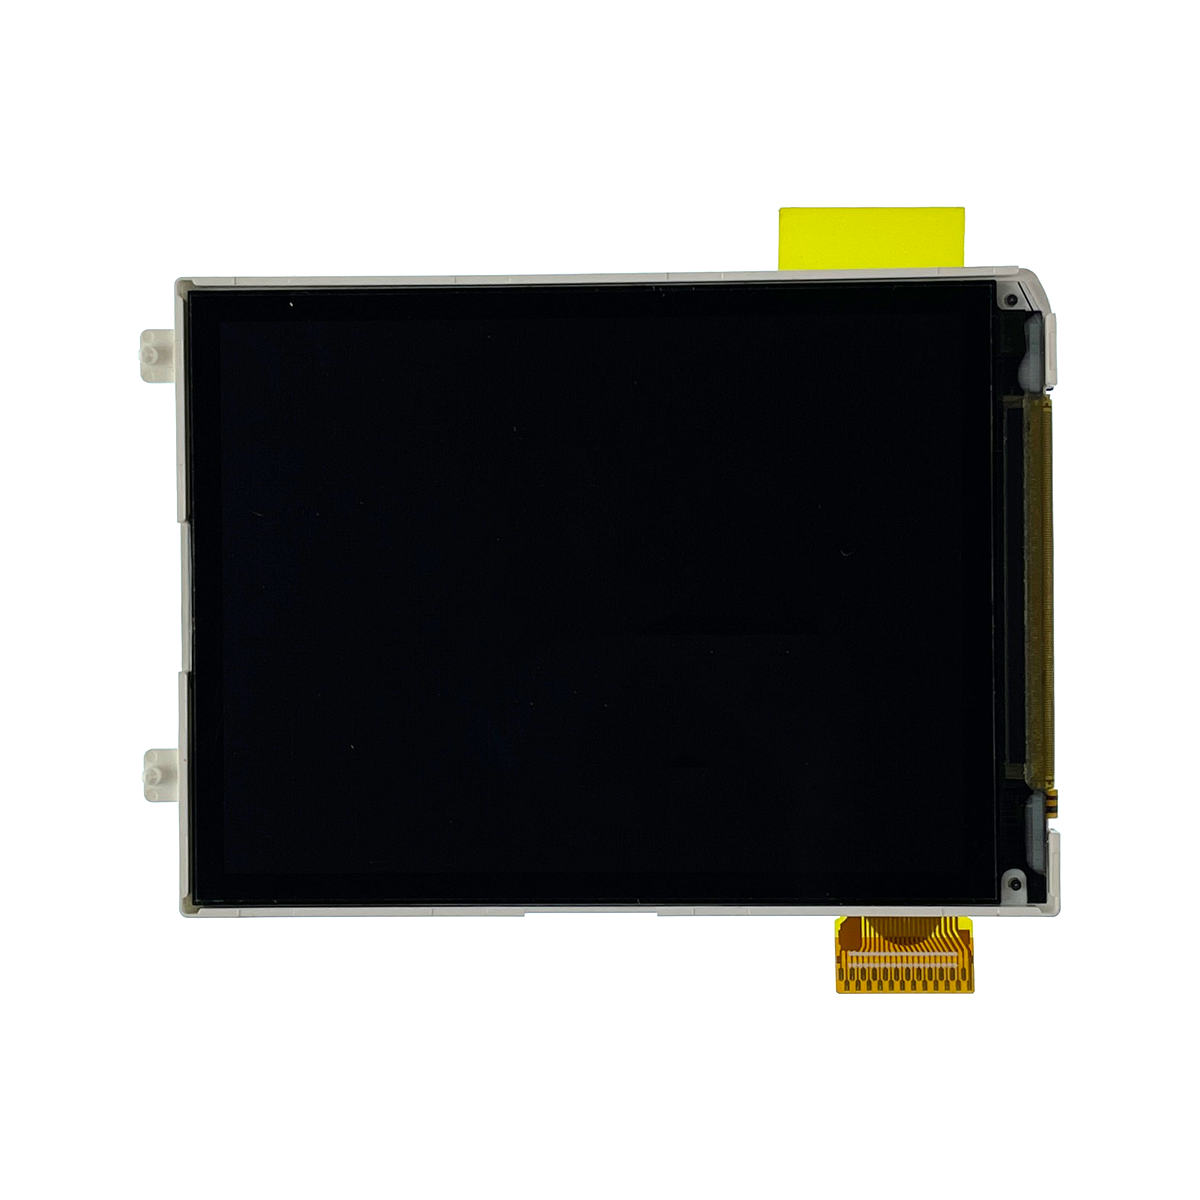 iPod Nano 3rd Generation LCD Screen Replacement